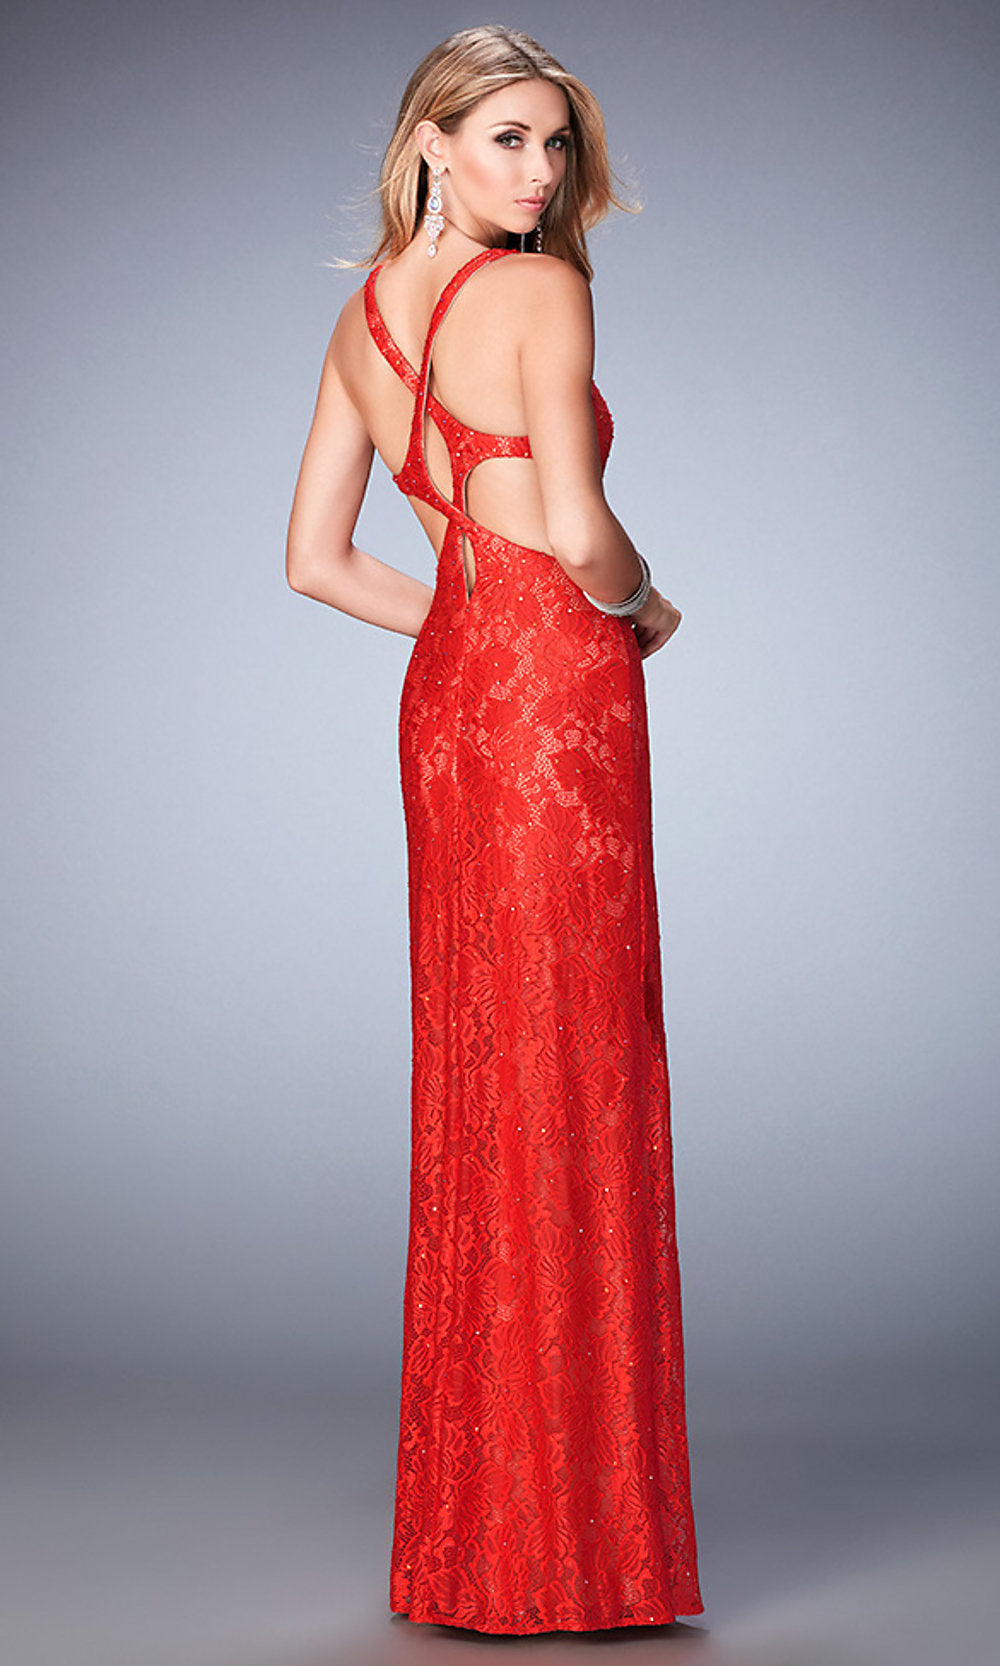  Lace Floor Length Formal Gown by La Femme